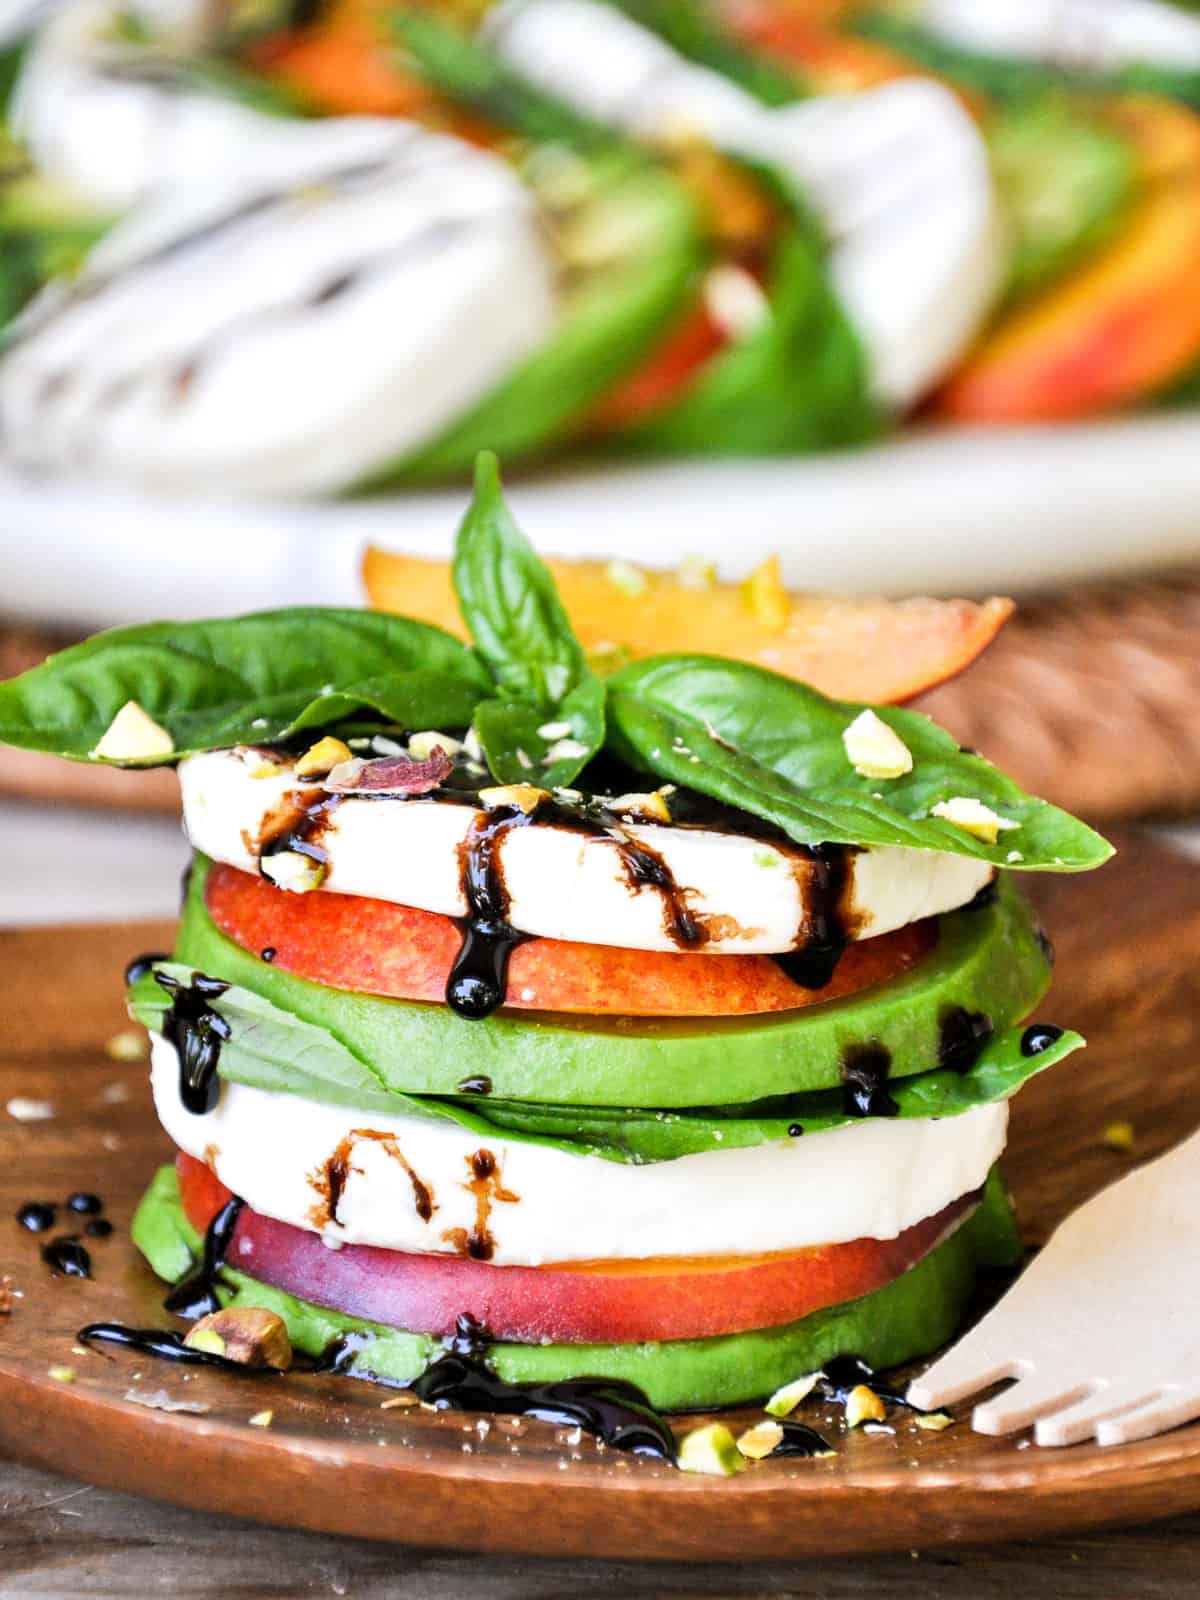 Summerfy your Caprese salad using nectarines and avocado. Delish!